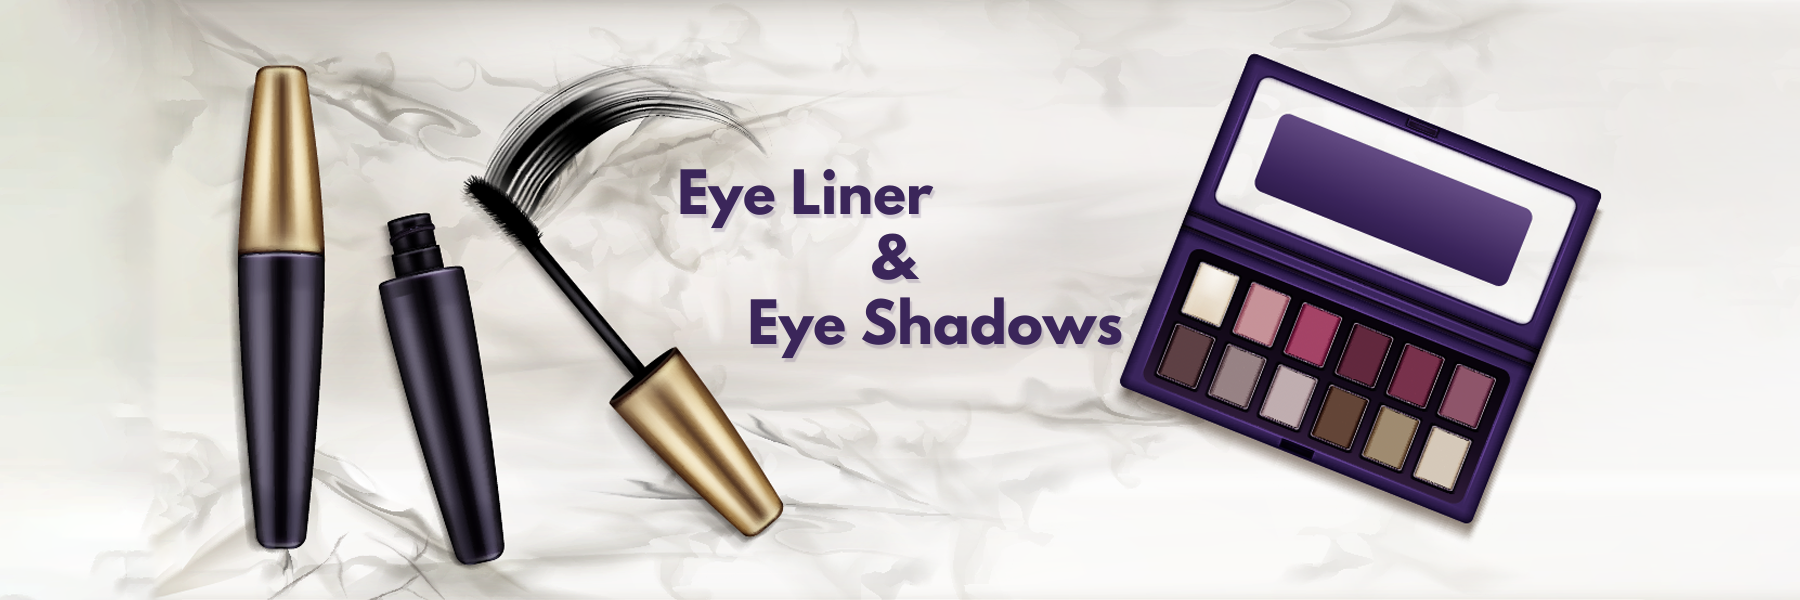 Eye liner & Eye shadows